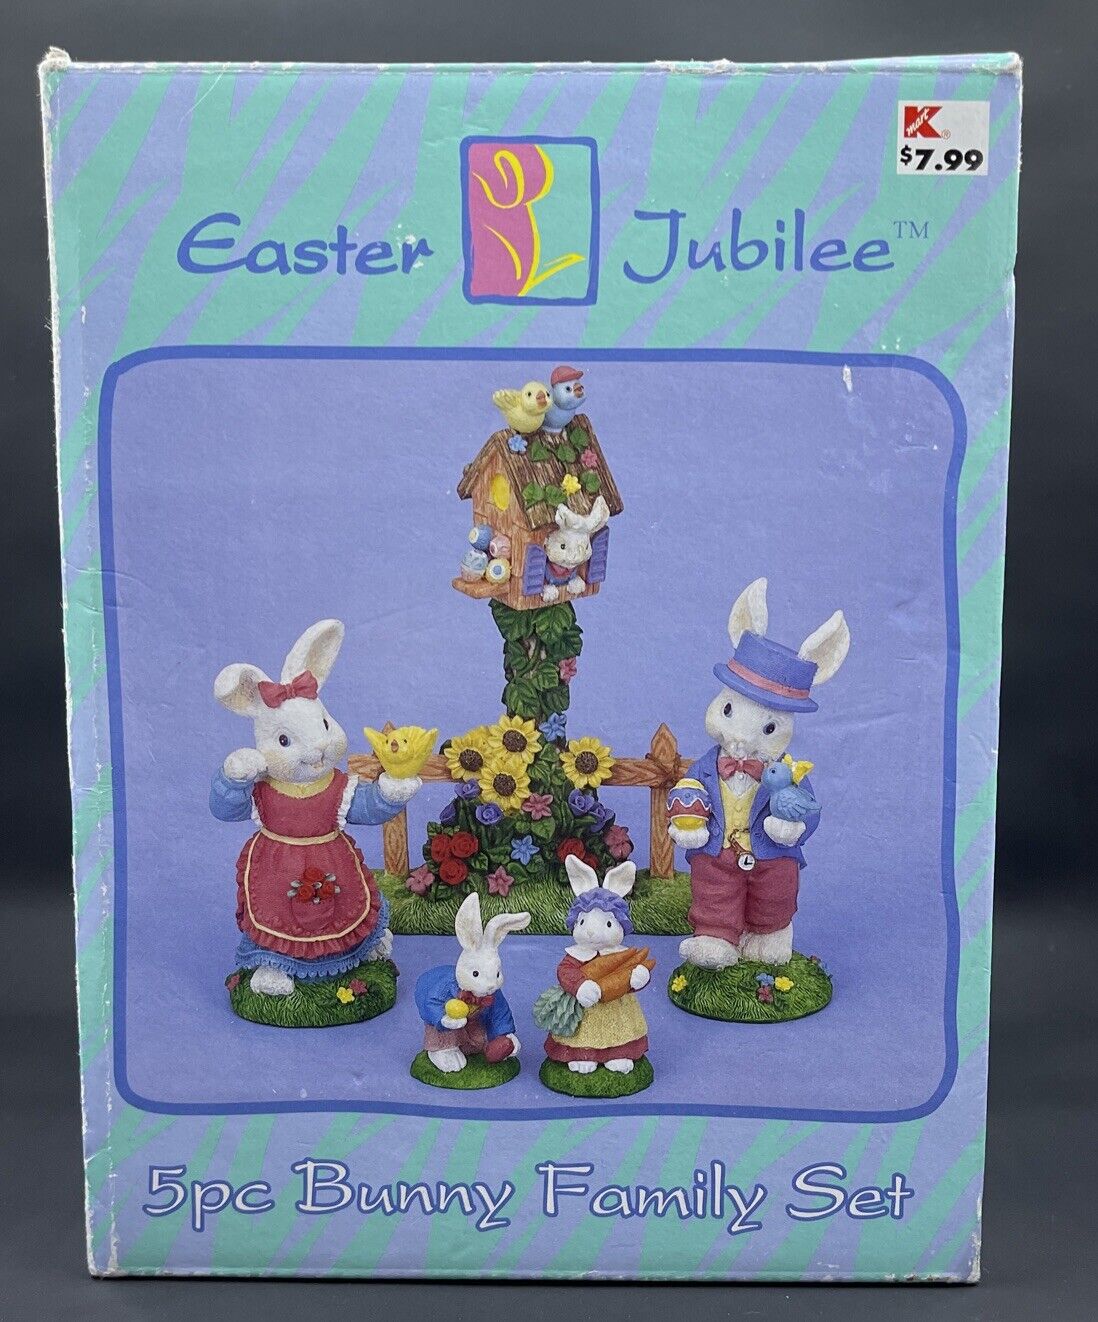 Easter Jubilee 5Pc Bunny Family Set Vintage Kmart